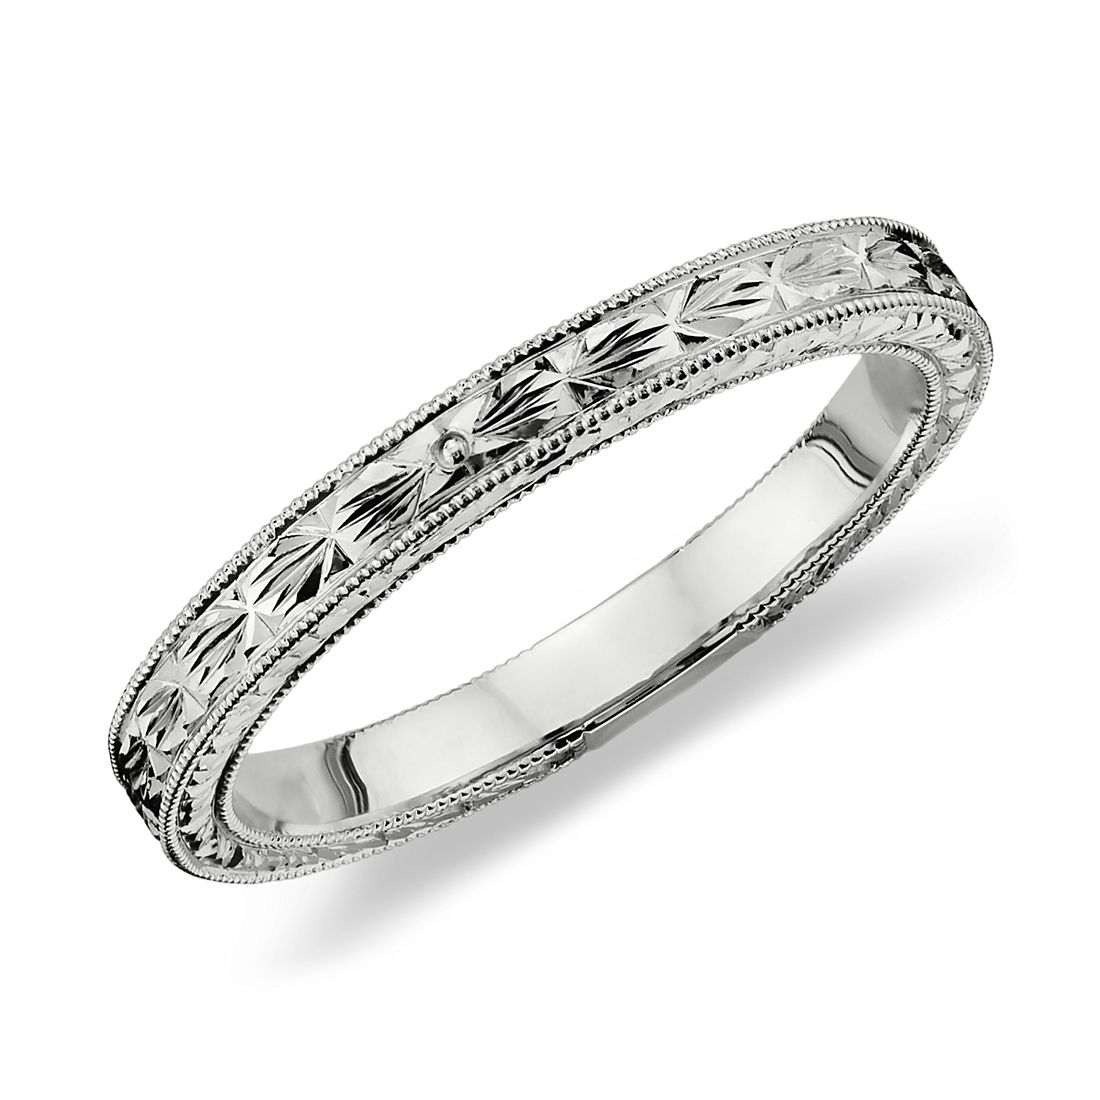 Hand-Engraved Wedding Ring in Platinum